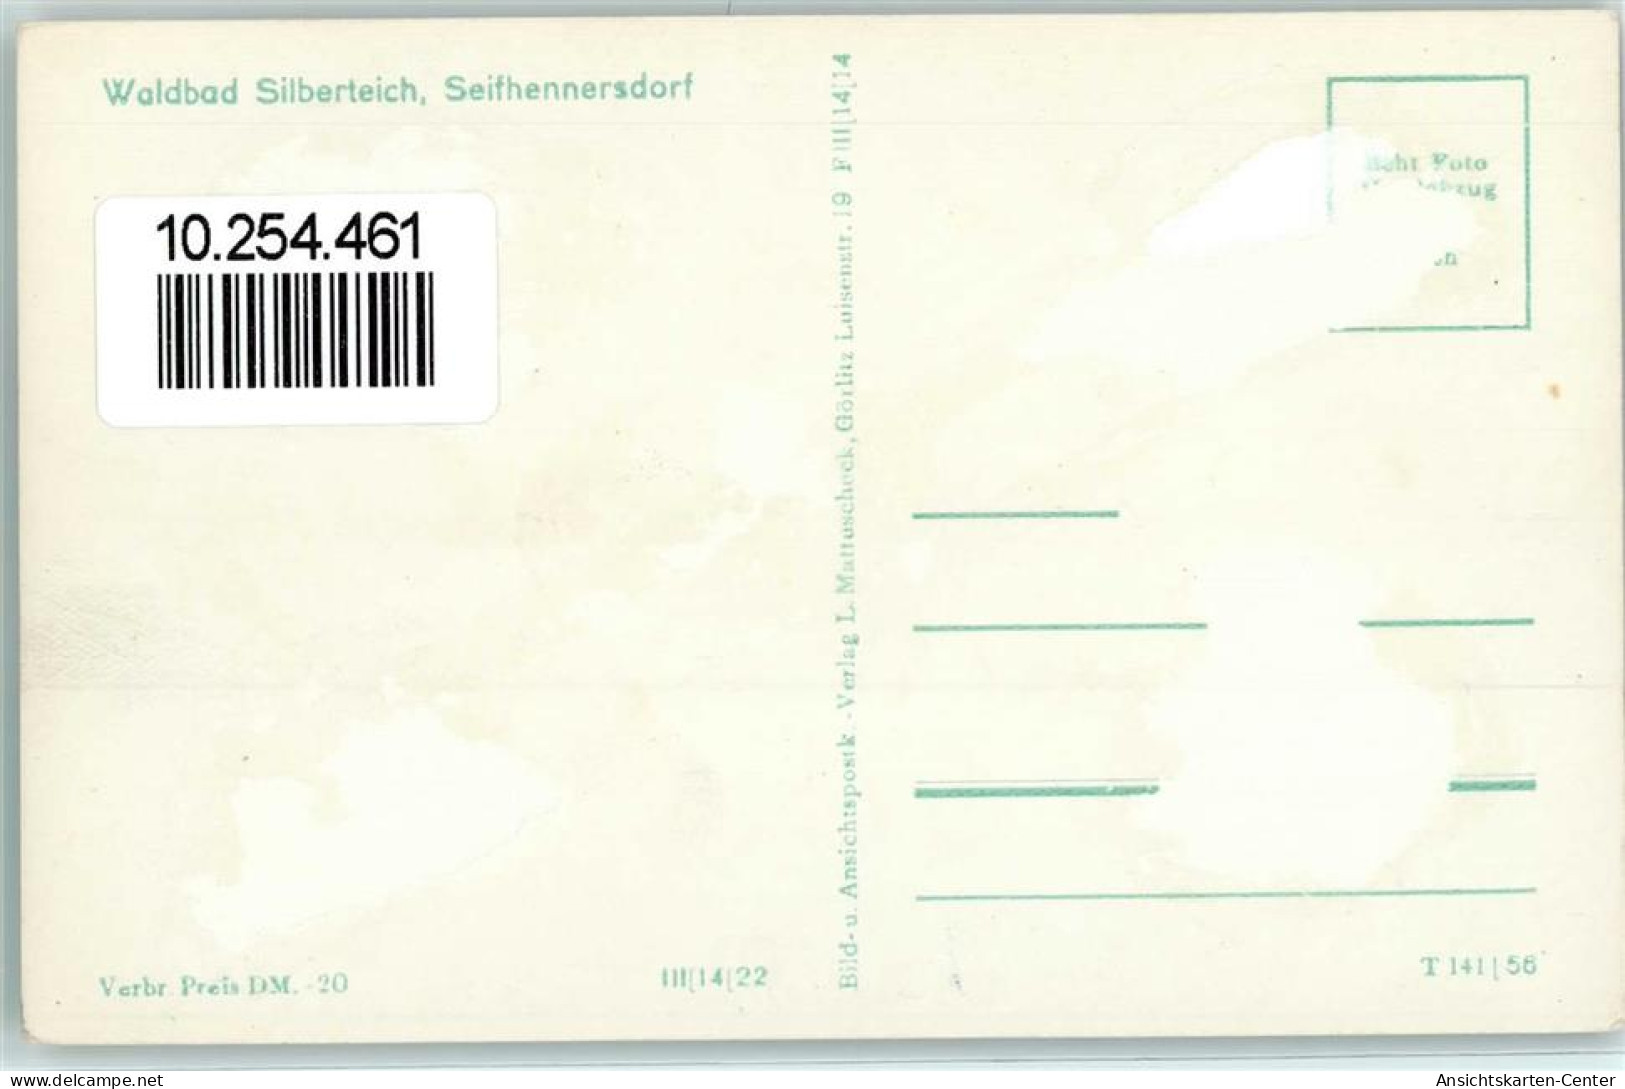 10254461 - Seifhennersdorf - Seifhennersdorf